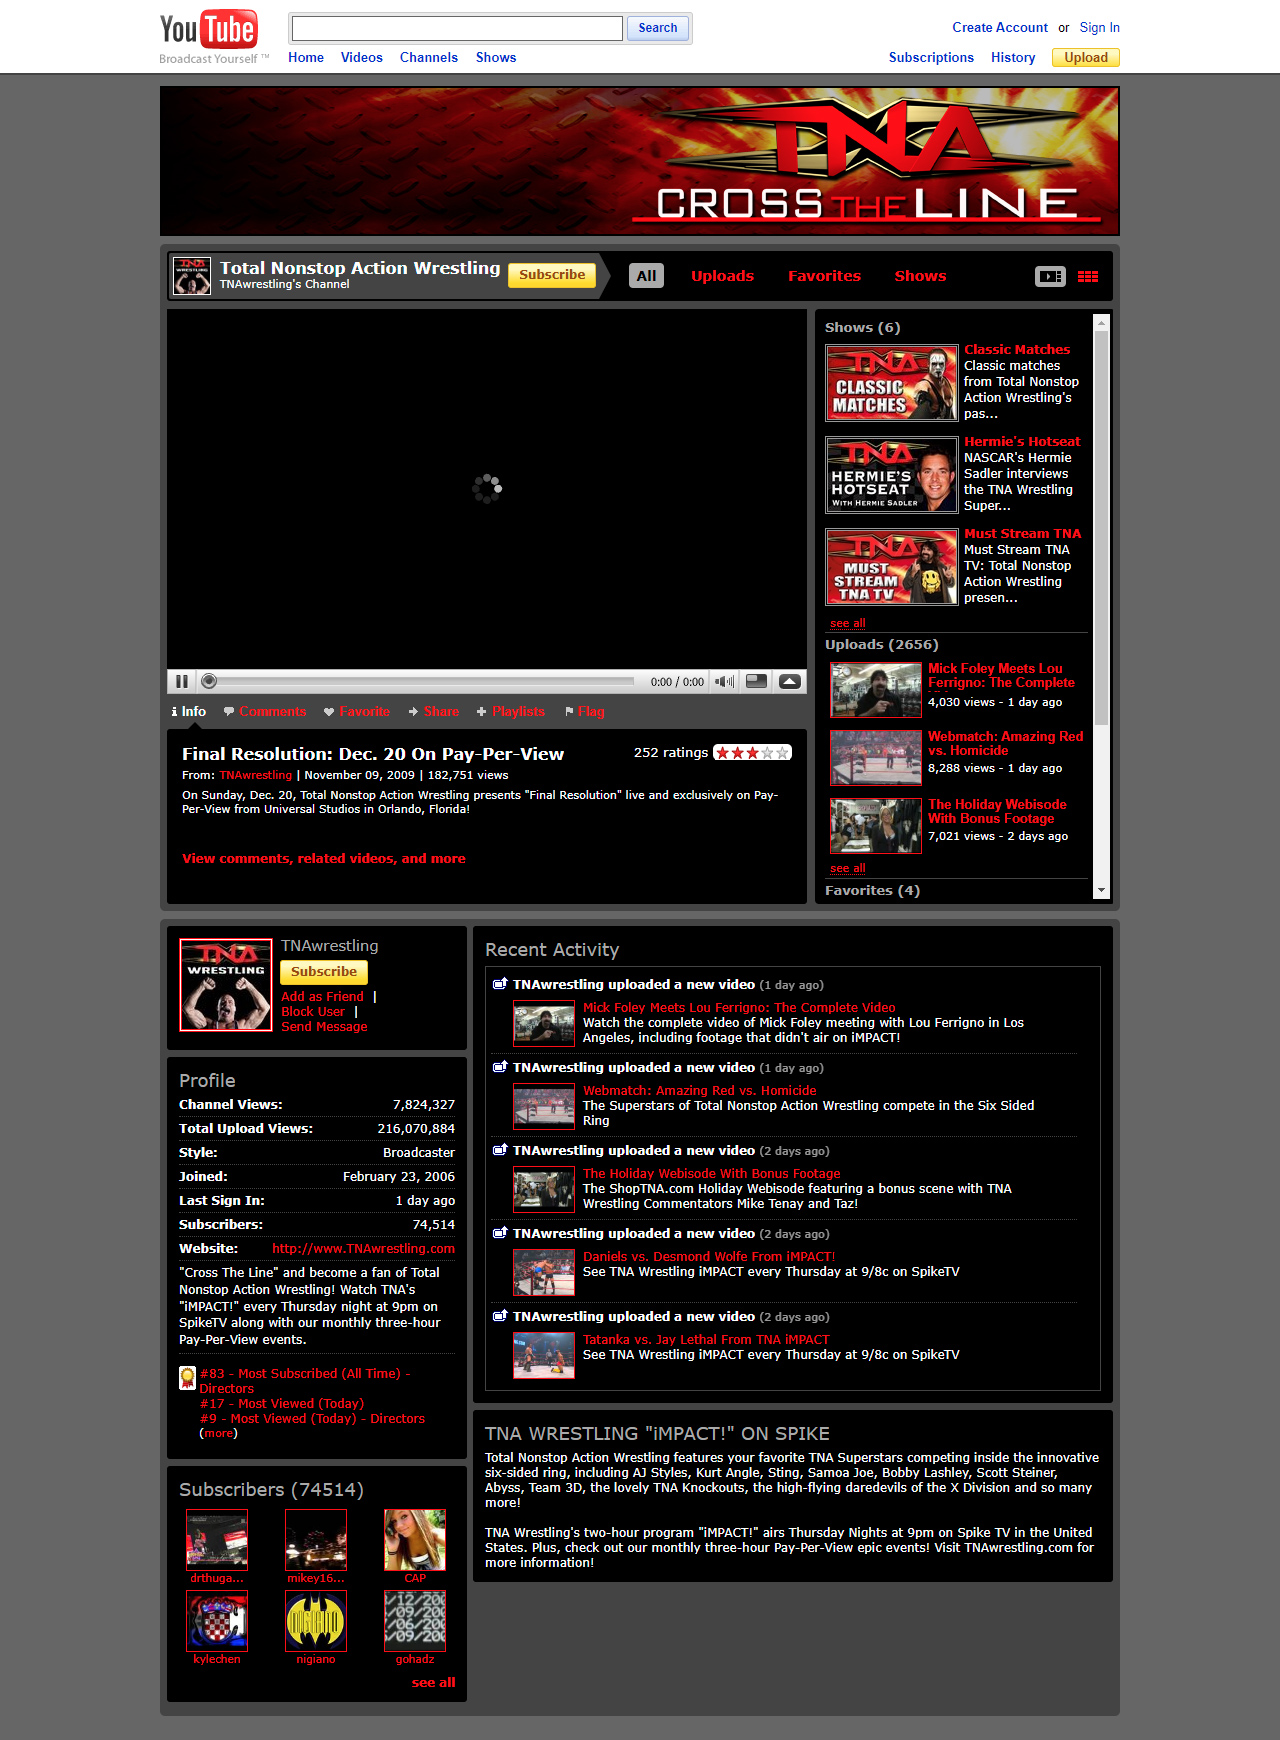 TNAwrestling YouTube Channel in 2009